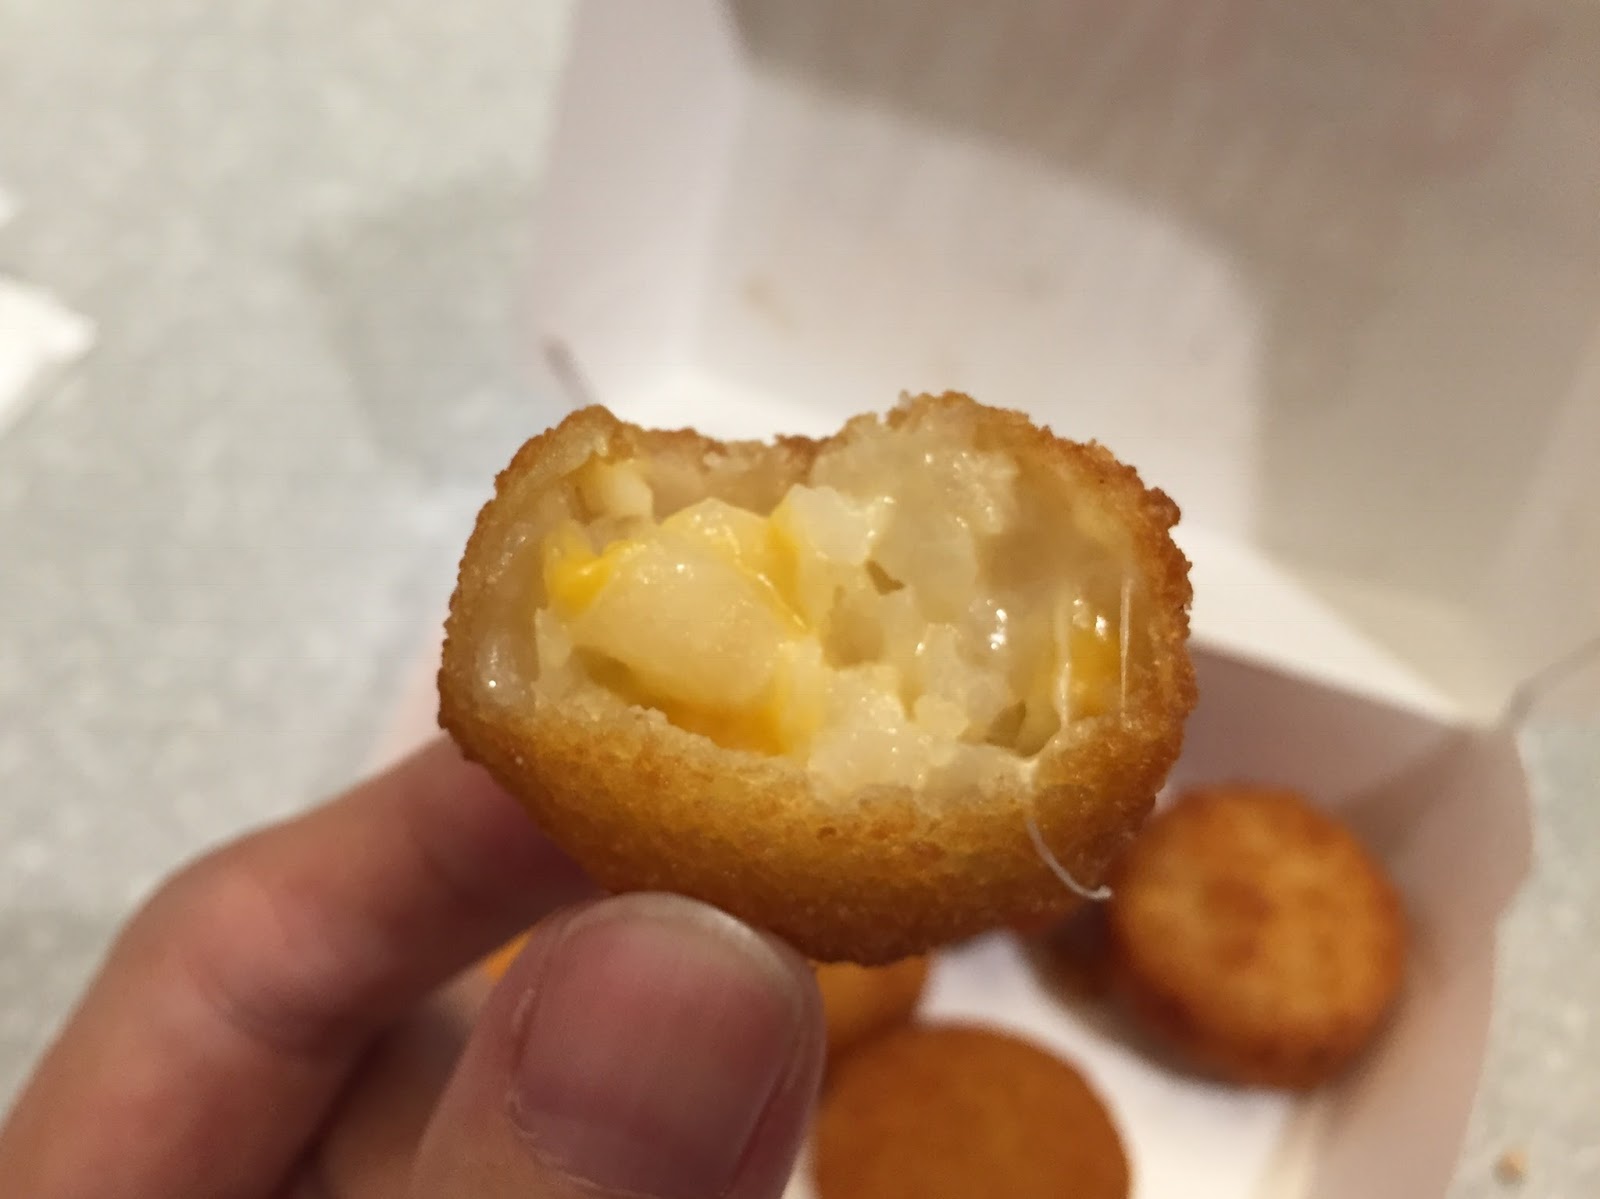 I M Made Of Sugar Chihiro S Food Blog Cheesy Tots From Burger King バーガーキングのチージートッツ